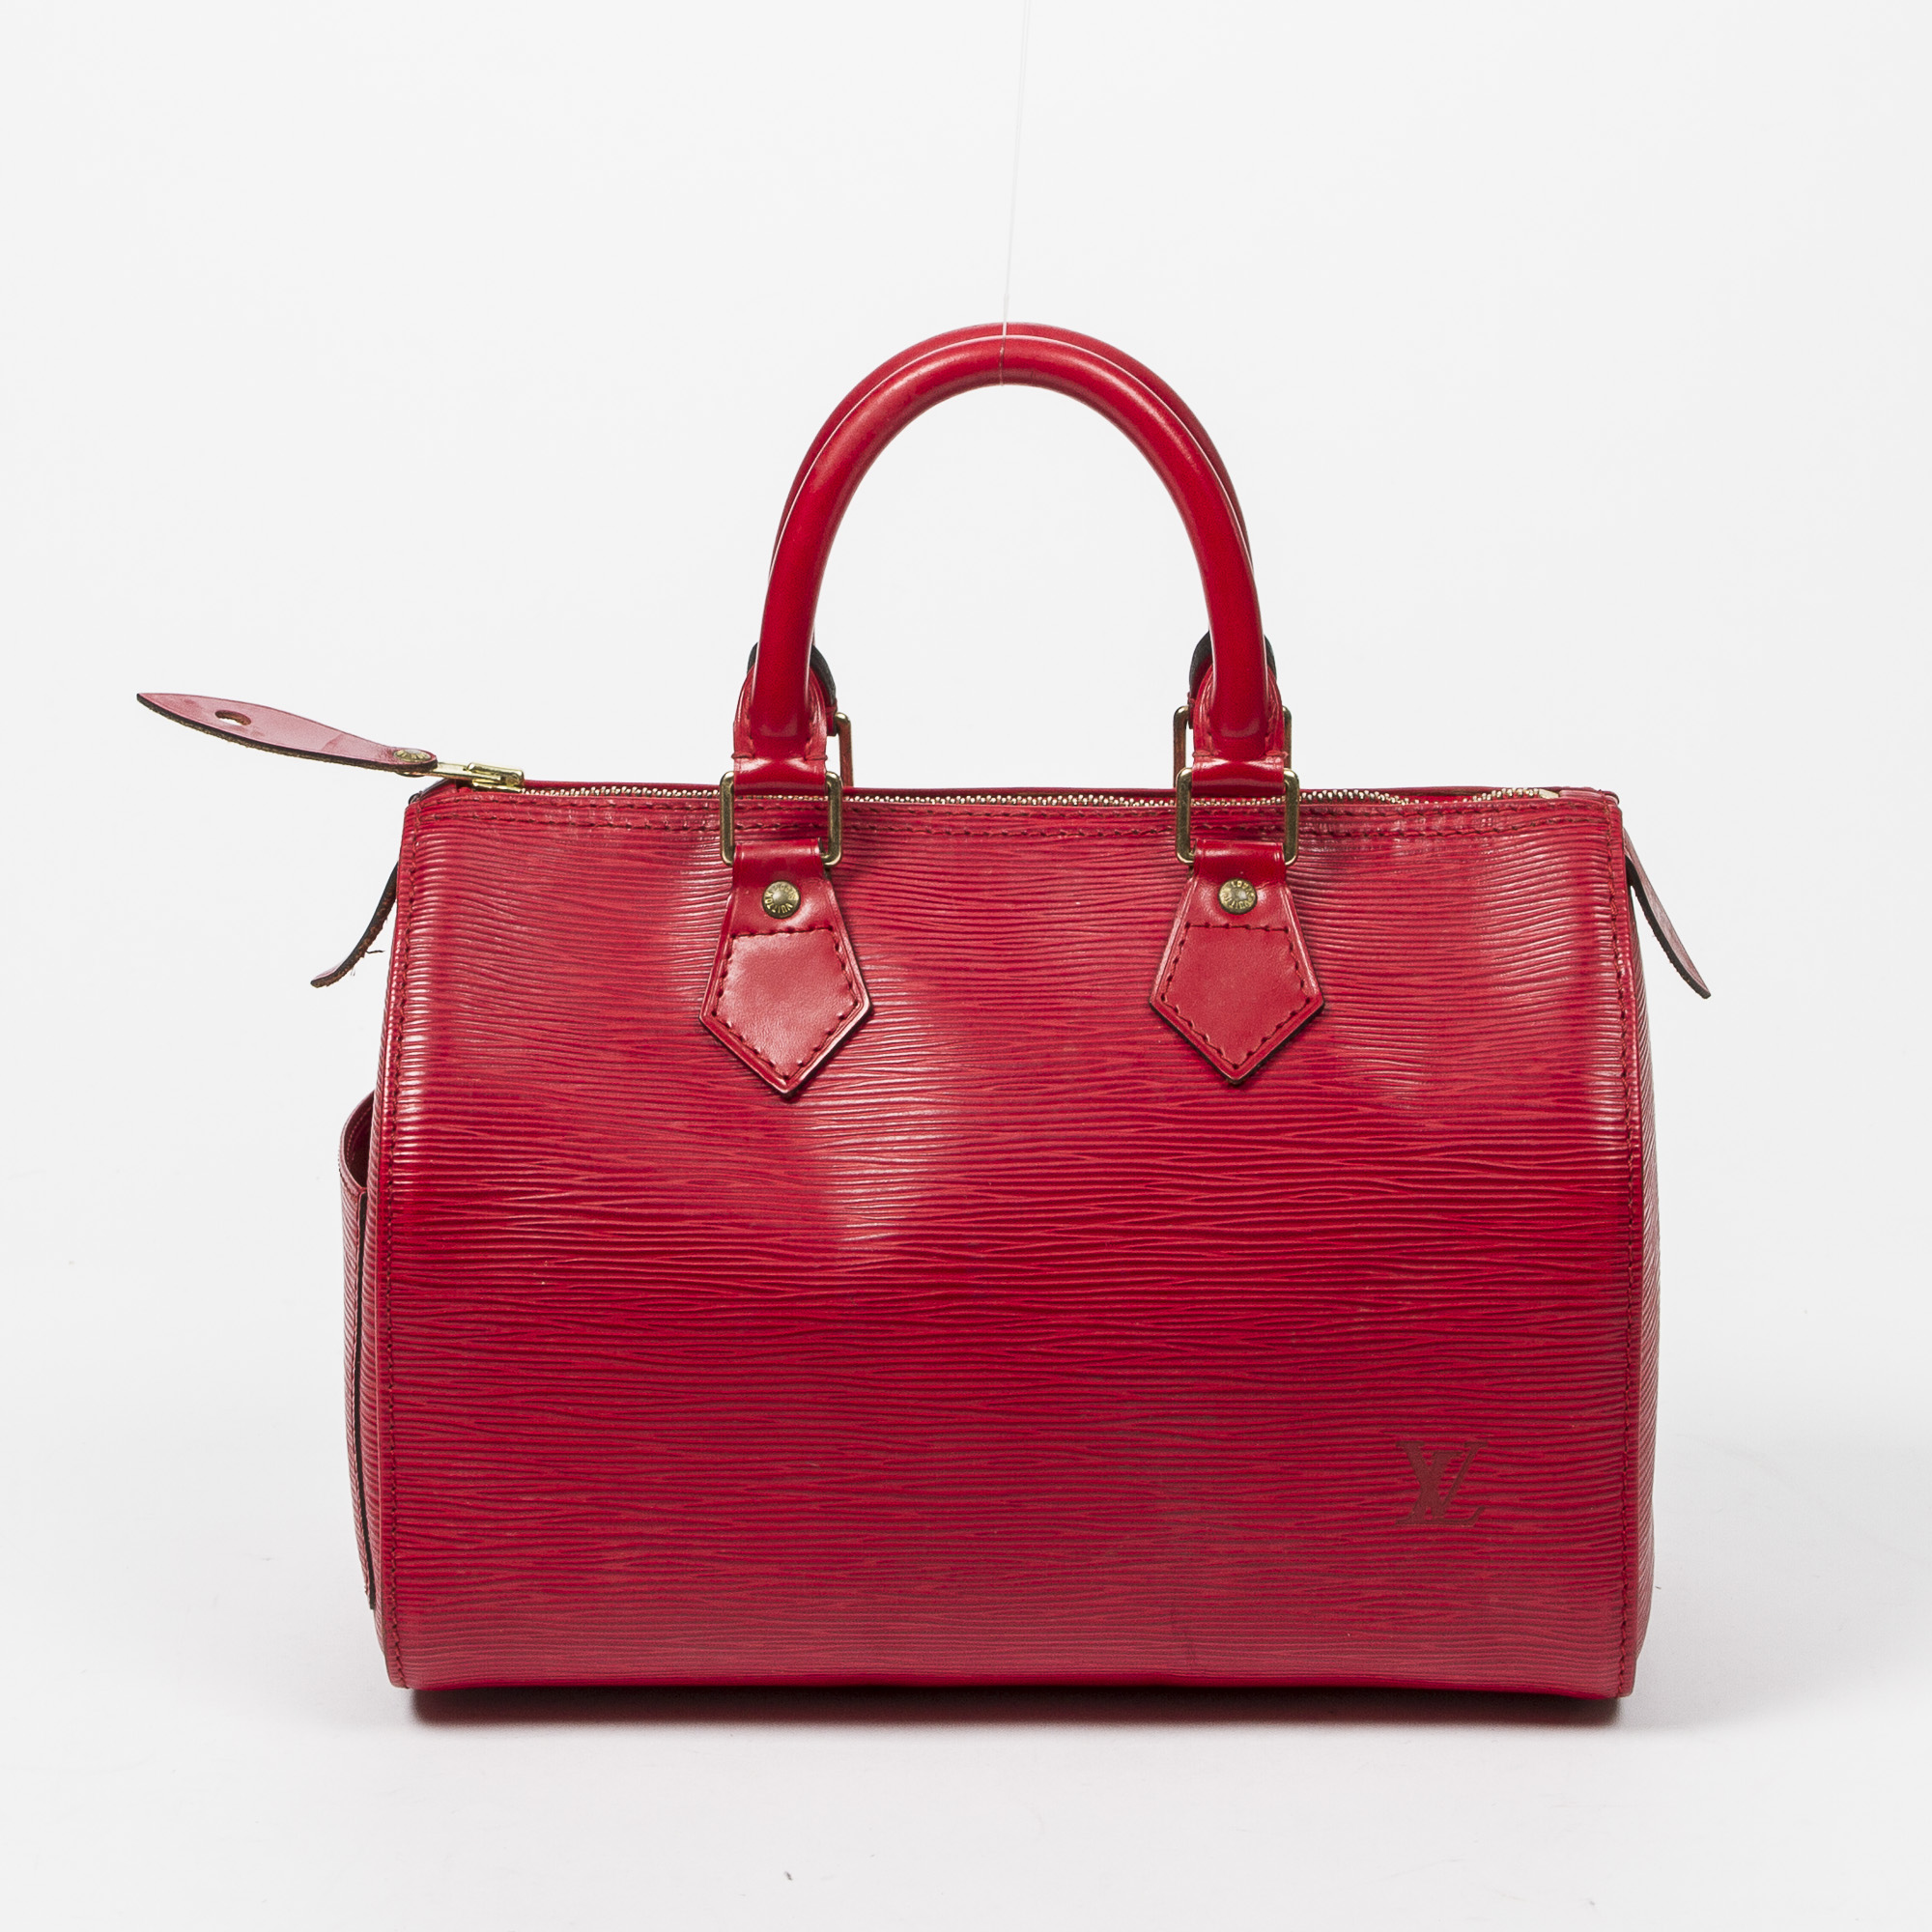 Louis Vuitton Speedy 30 Epi Red Handbag